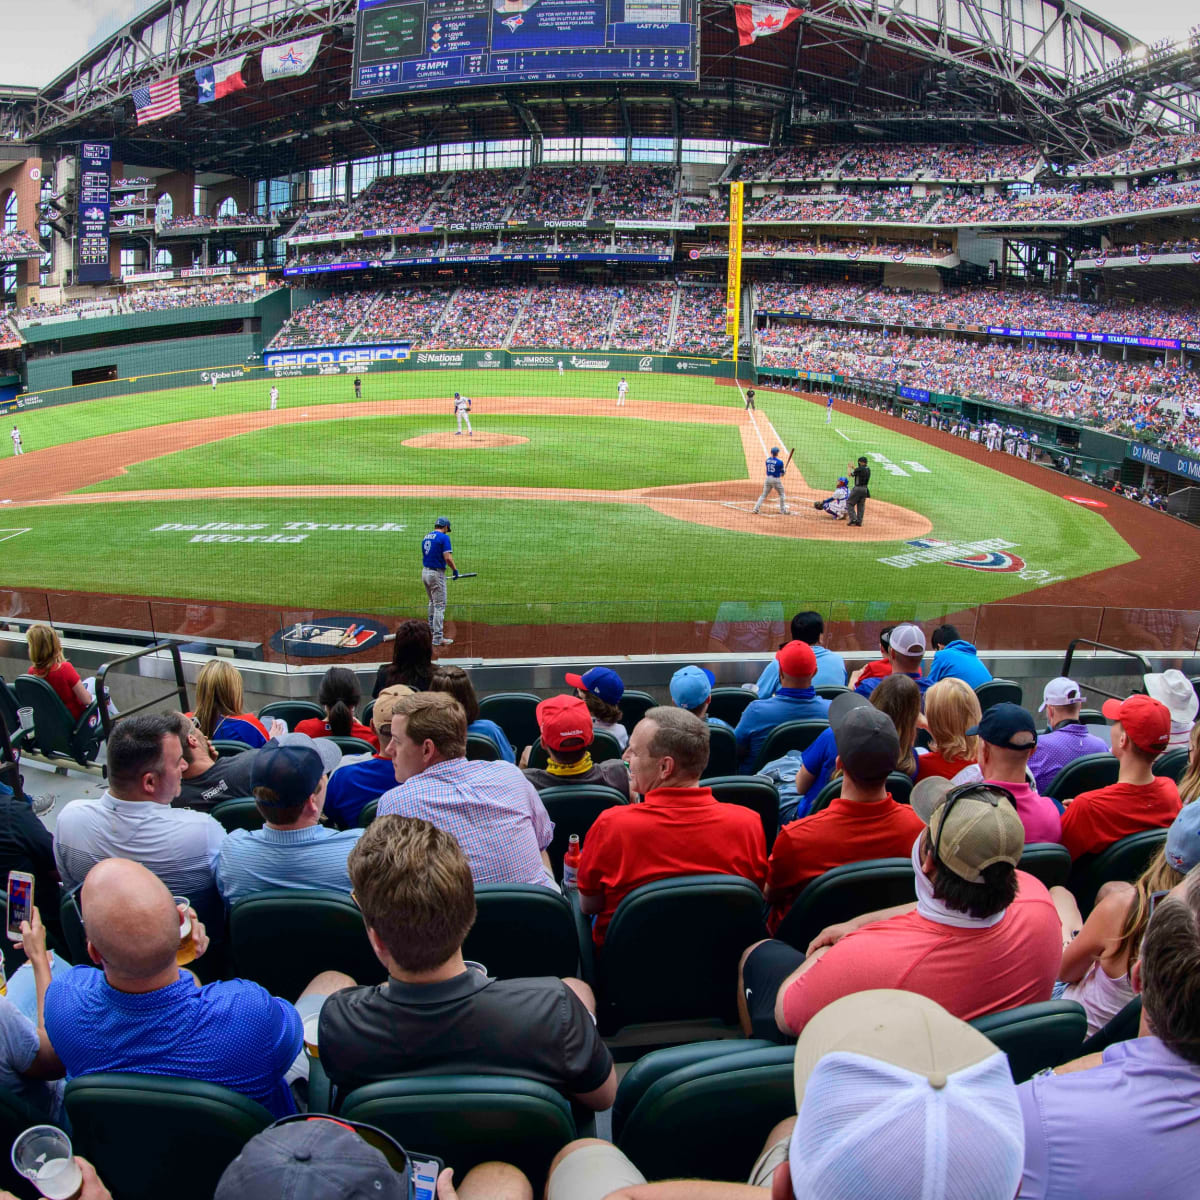 Texas Rangers home opener: Globe Life Field filed to capacity